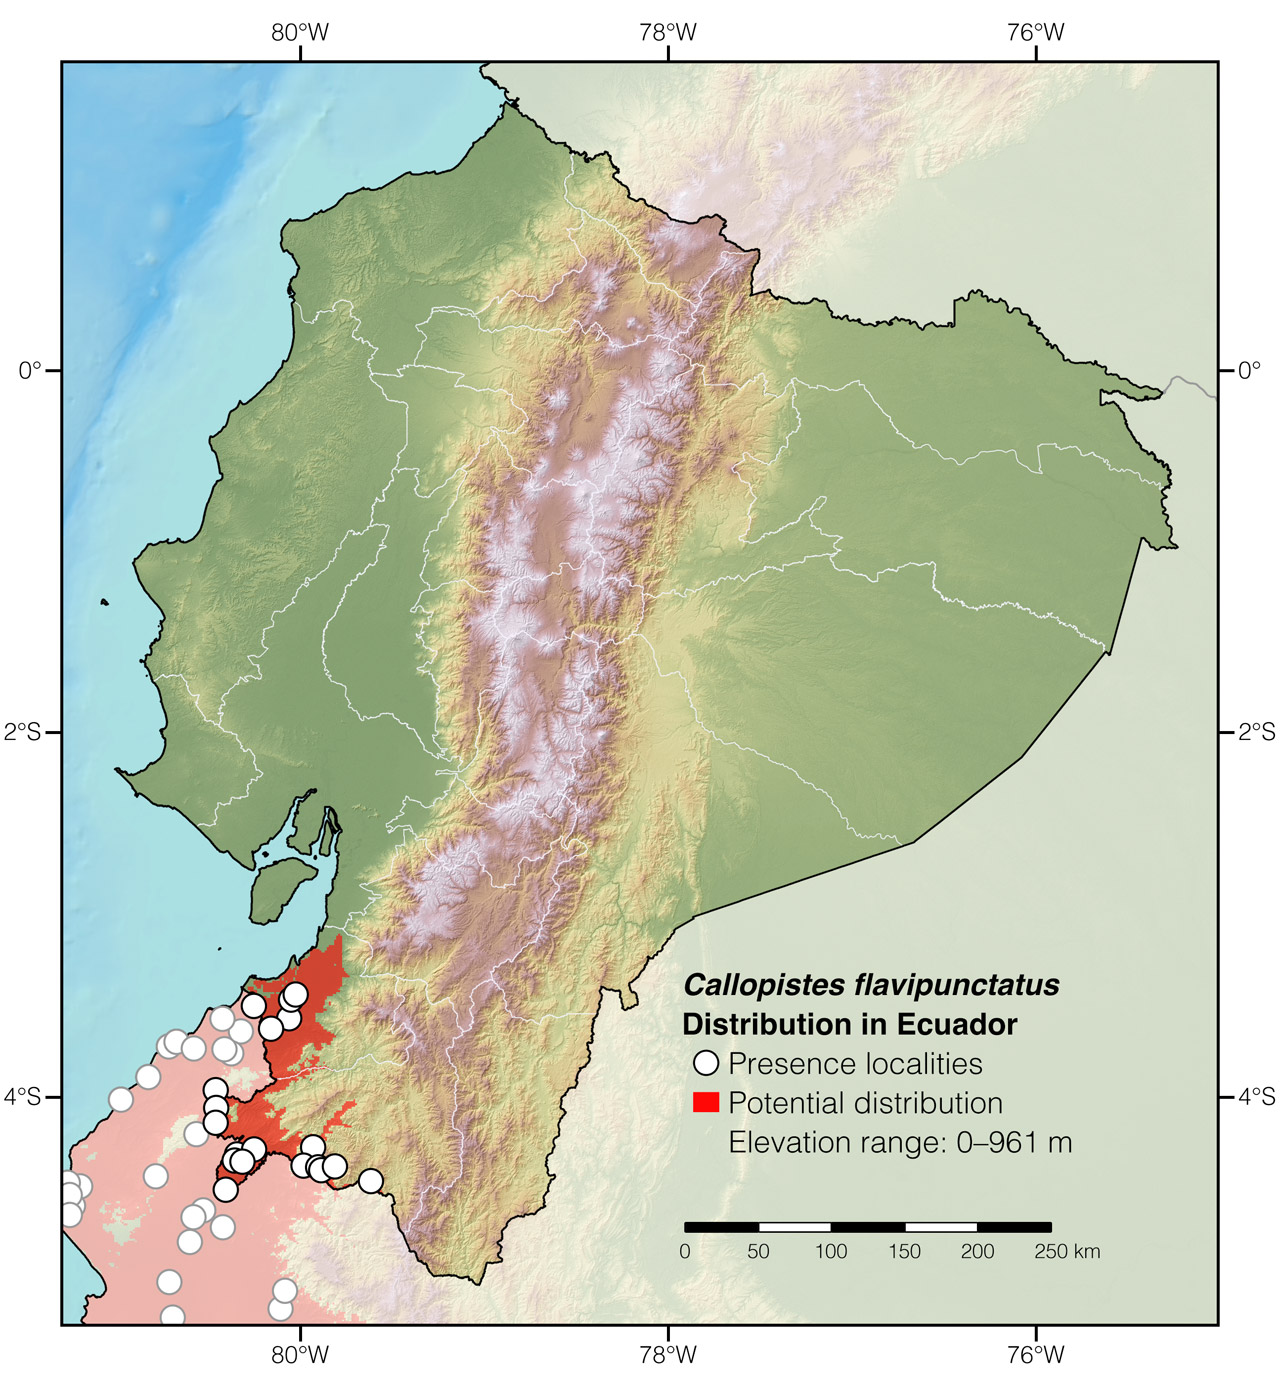 Distribution of Callopistes flavipunctatus in Ecuador